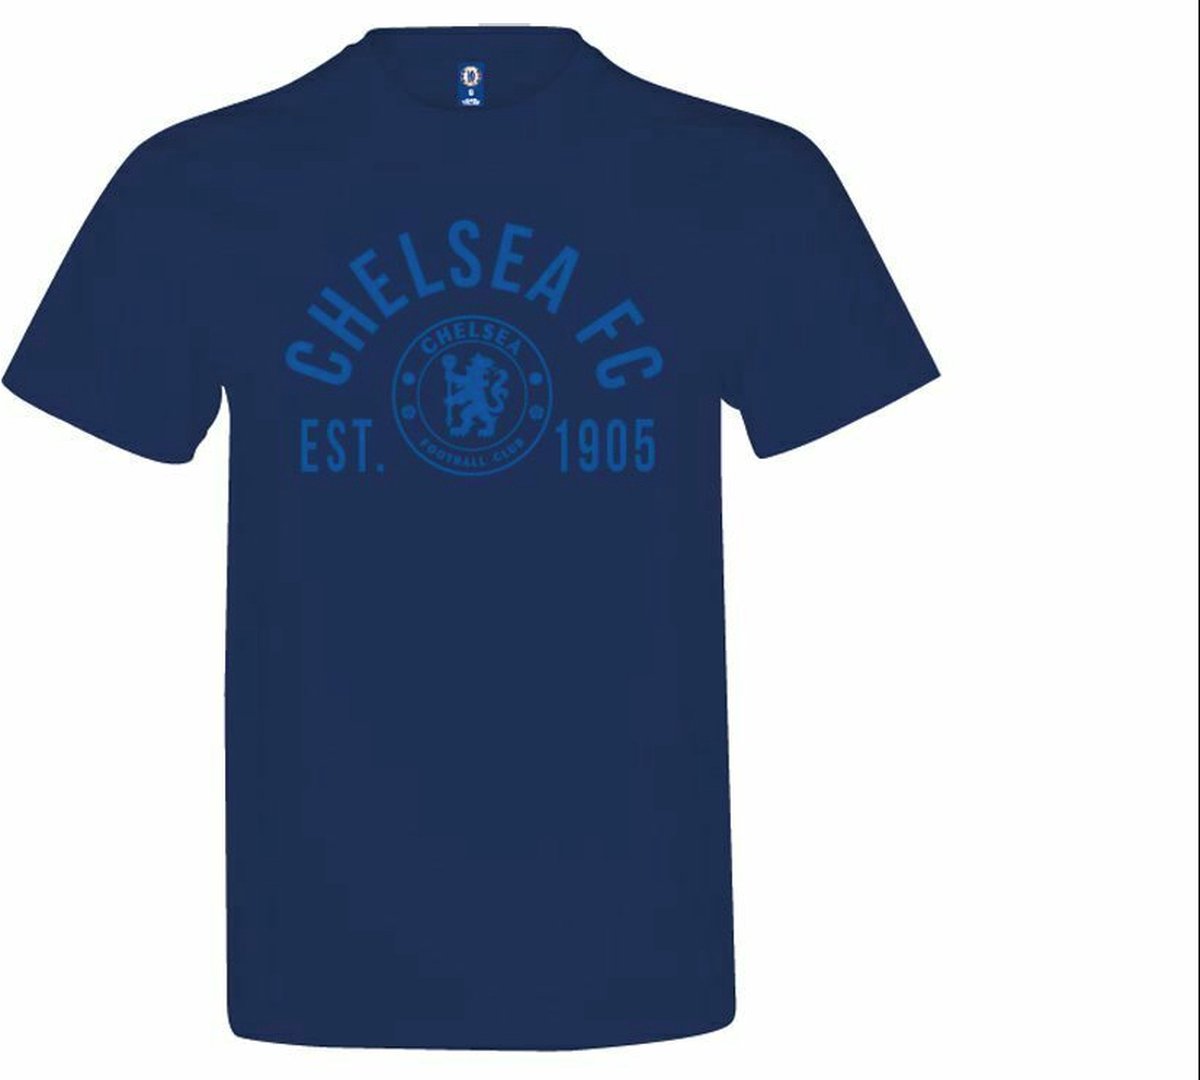 Chelsea T-Shirt Navy Blue Maat L